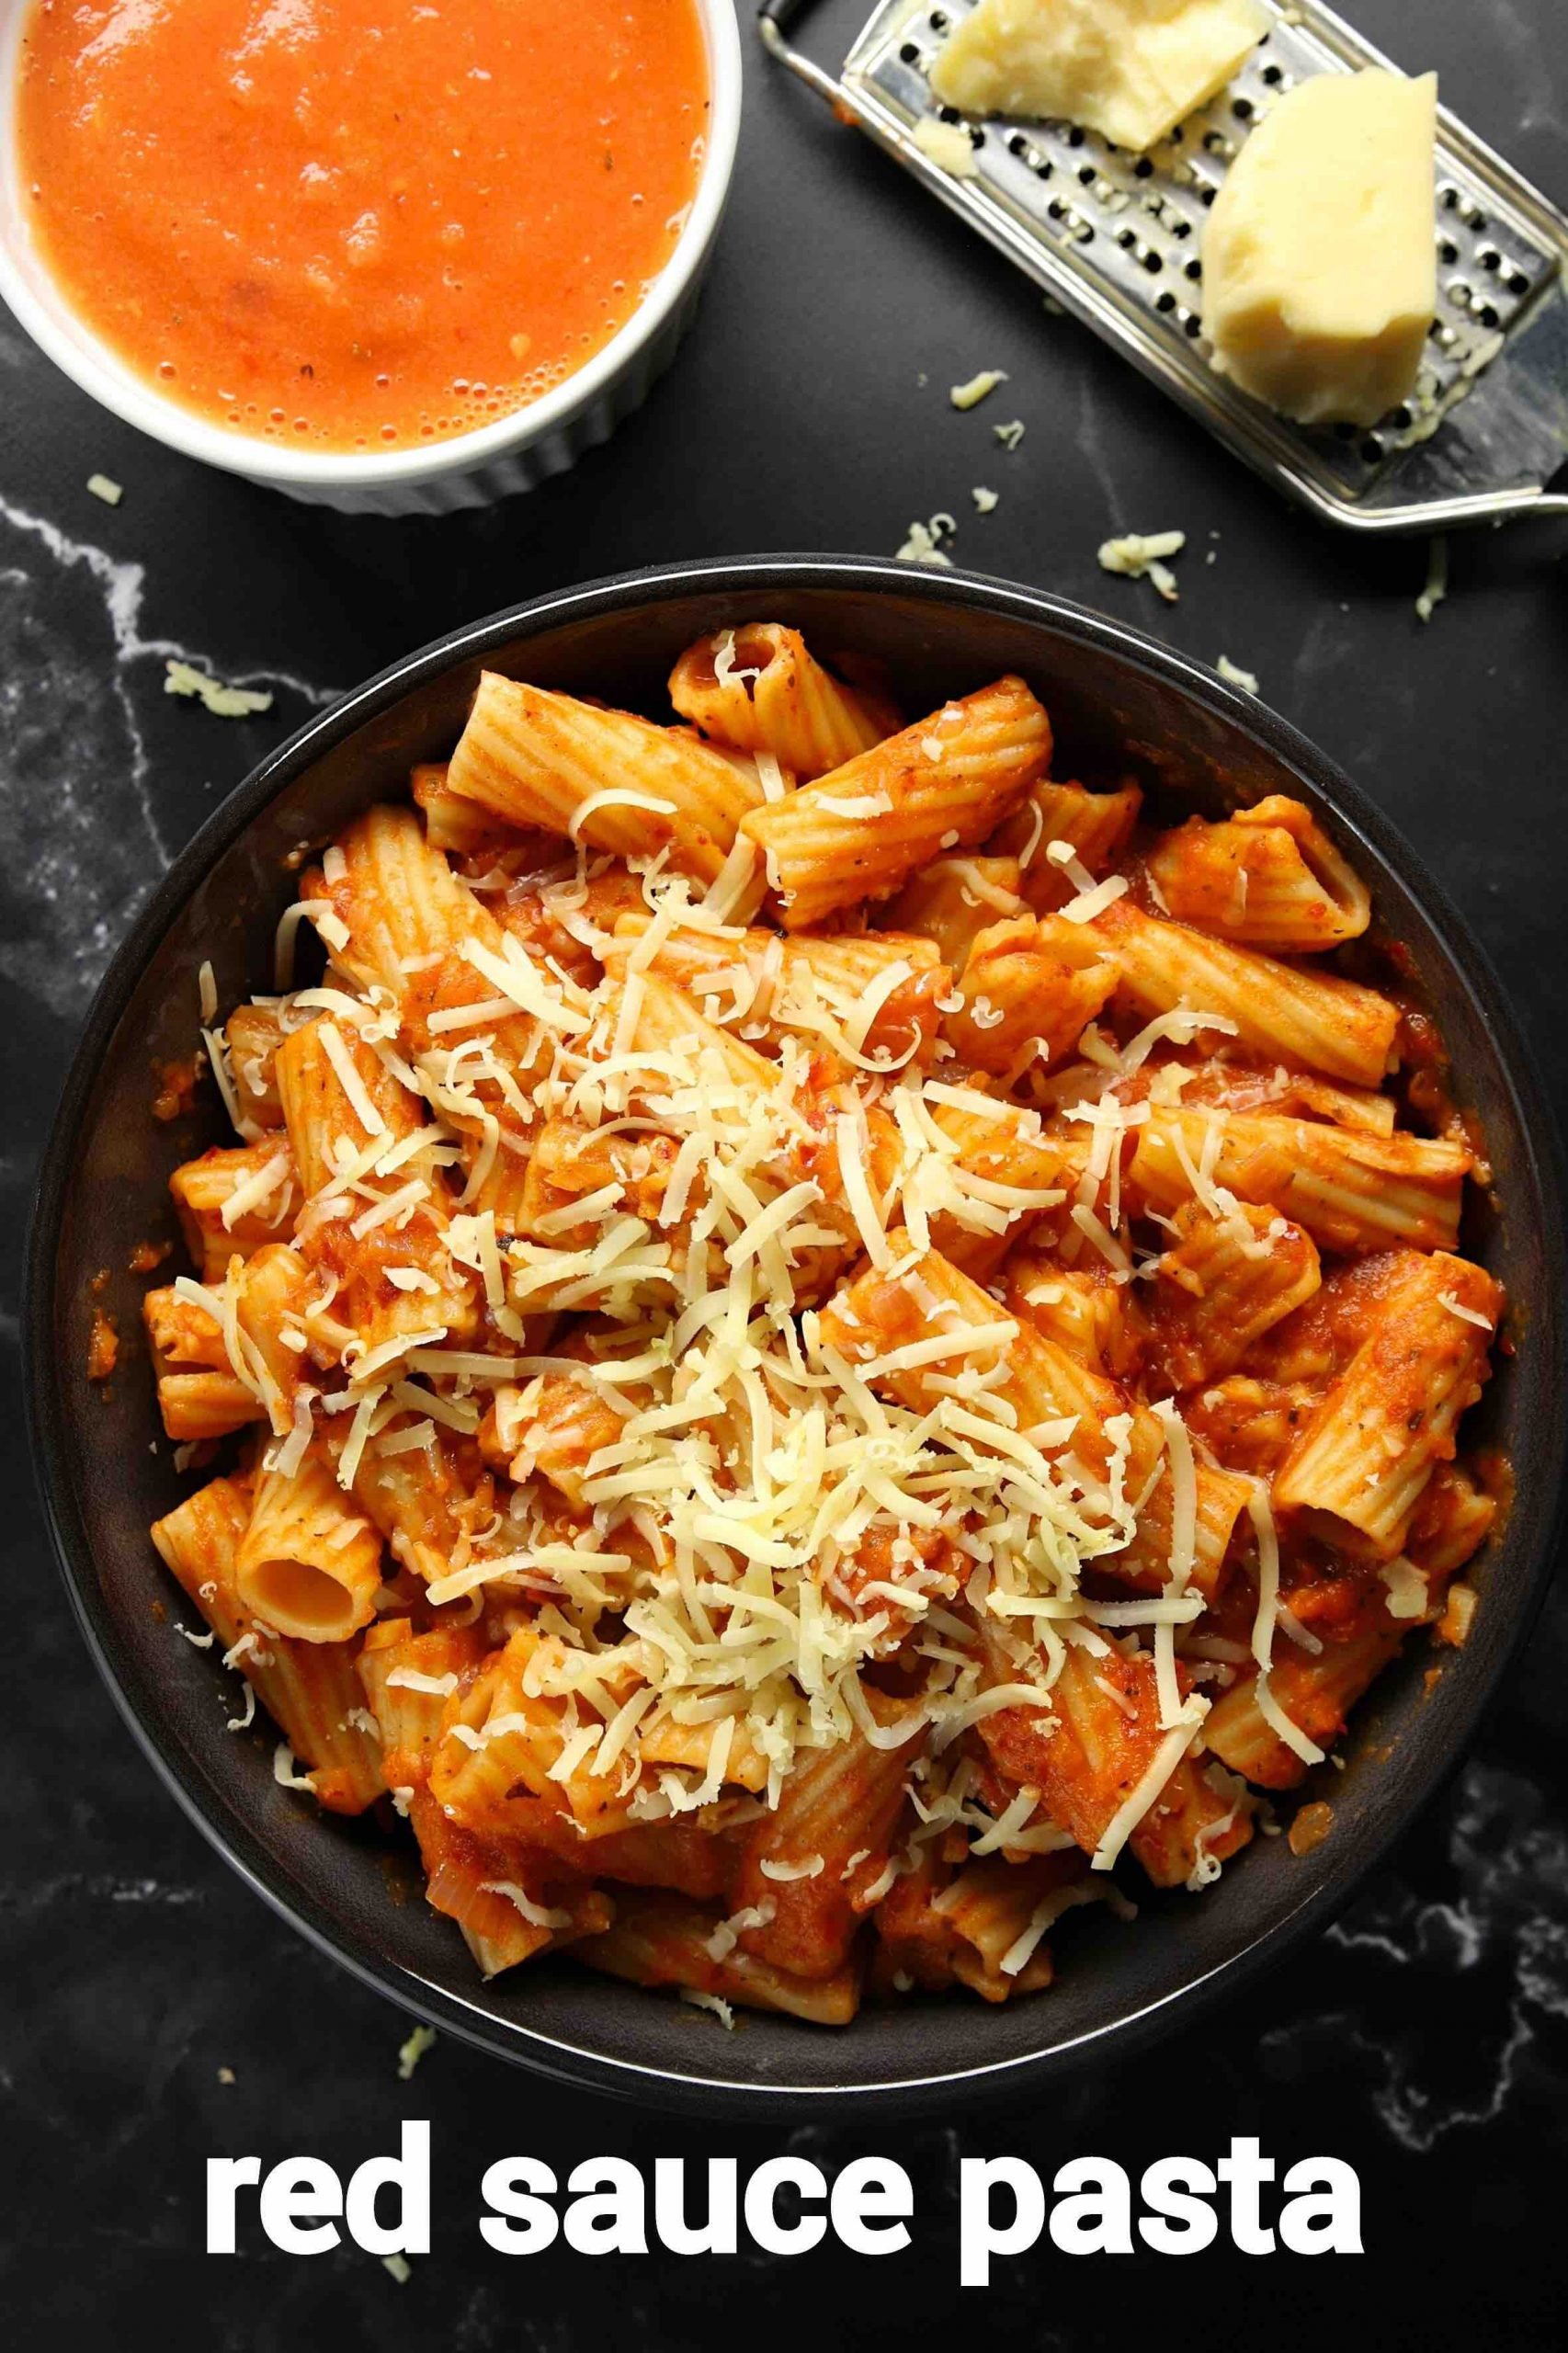 red sauce pasta recipe | how to make classic sauce pasta recipe